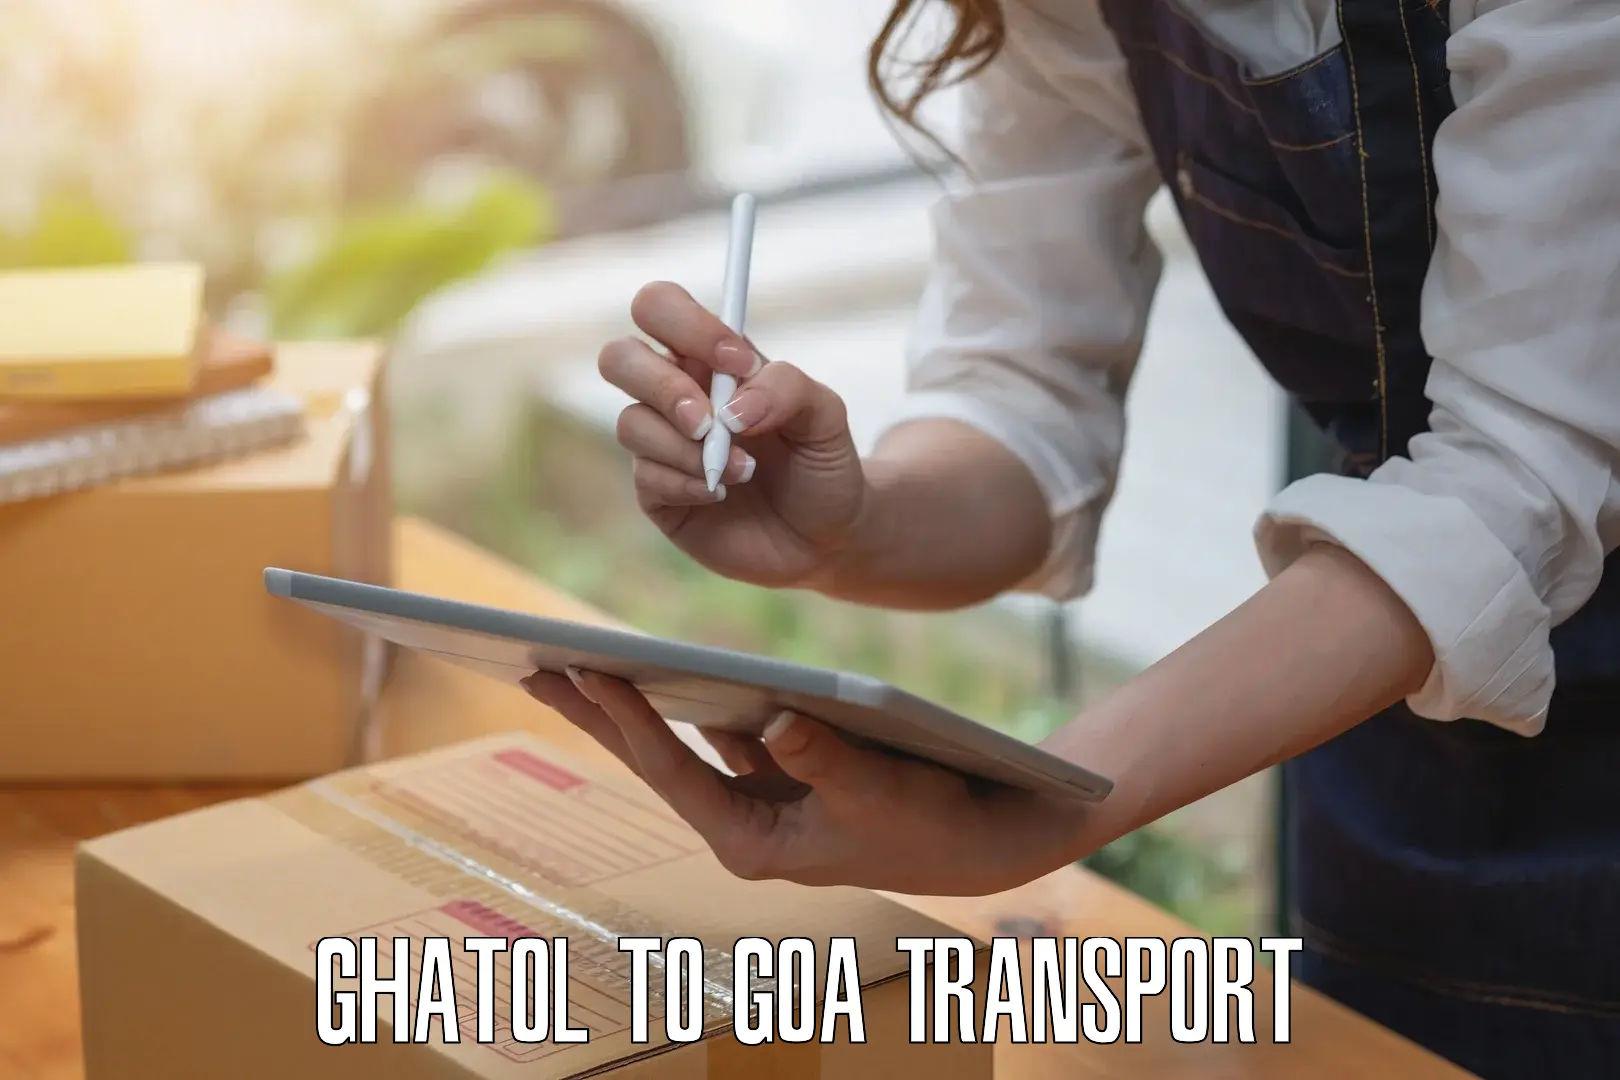 Daily transport service Ghatol to Mormugao Port